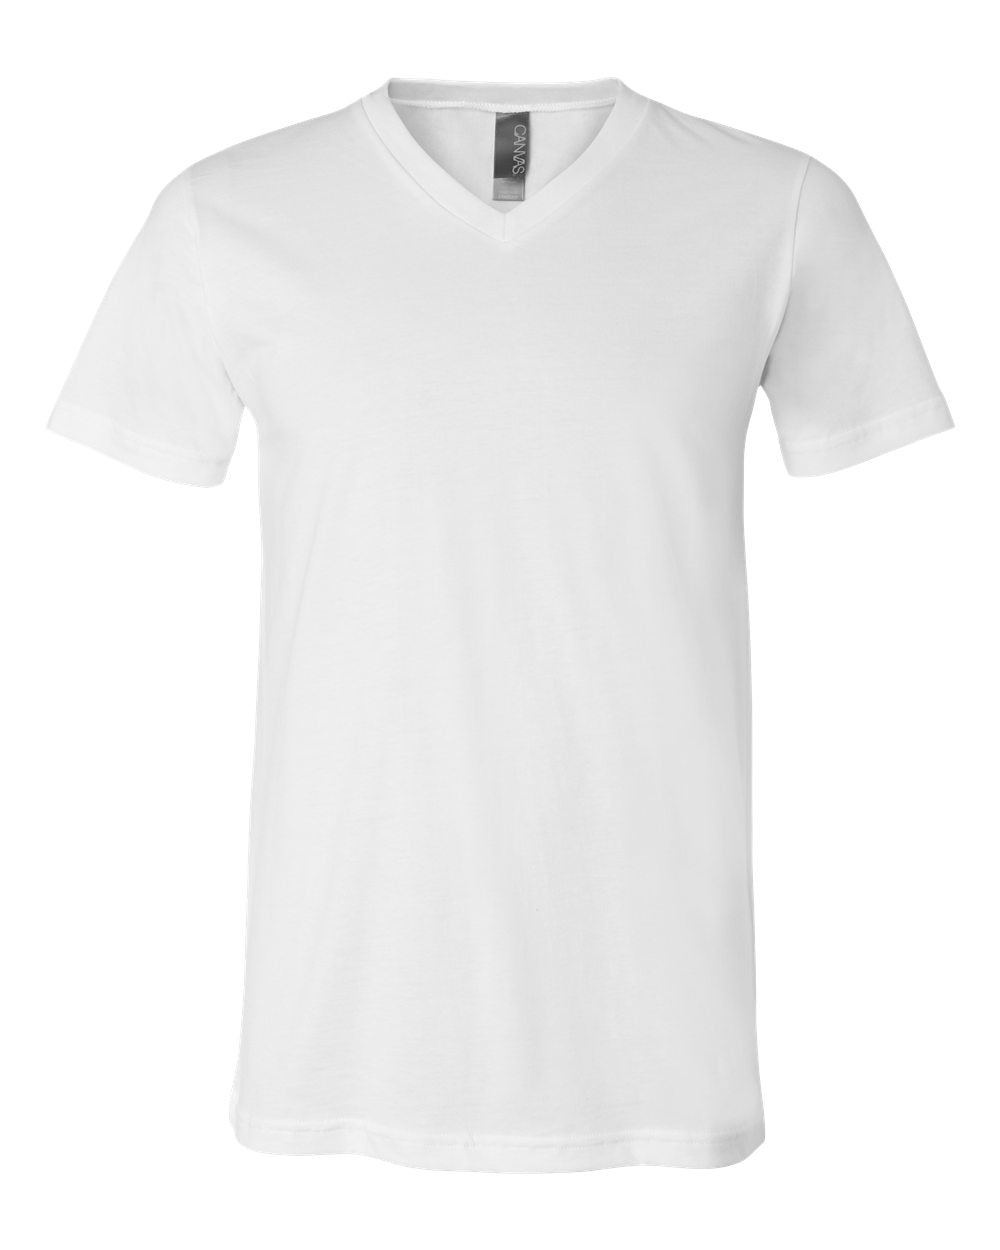 BELLA + CANVAS - Unisex Jersey V-Neck Tee - 3005 - Budget Promotion T-shirt  CA$ 11.79